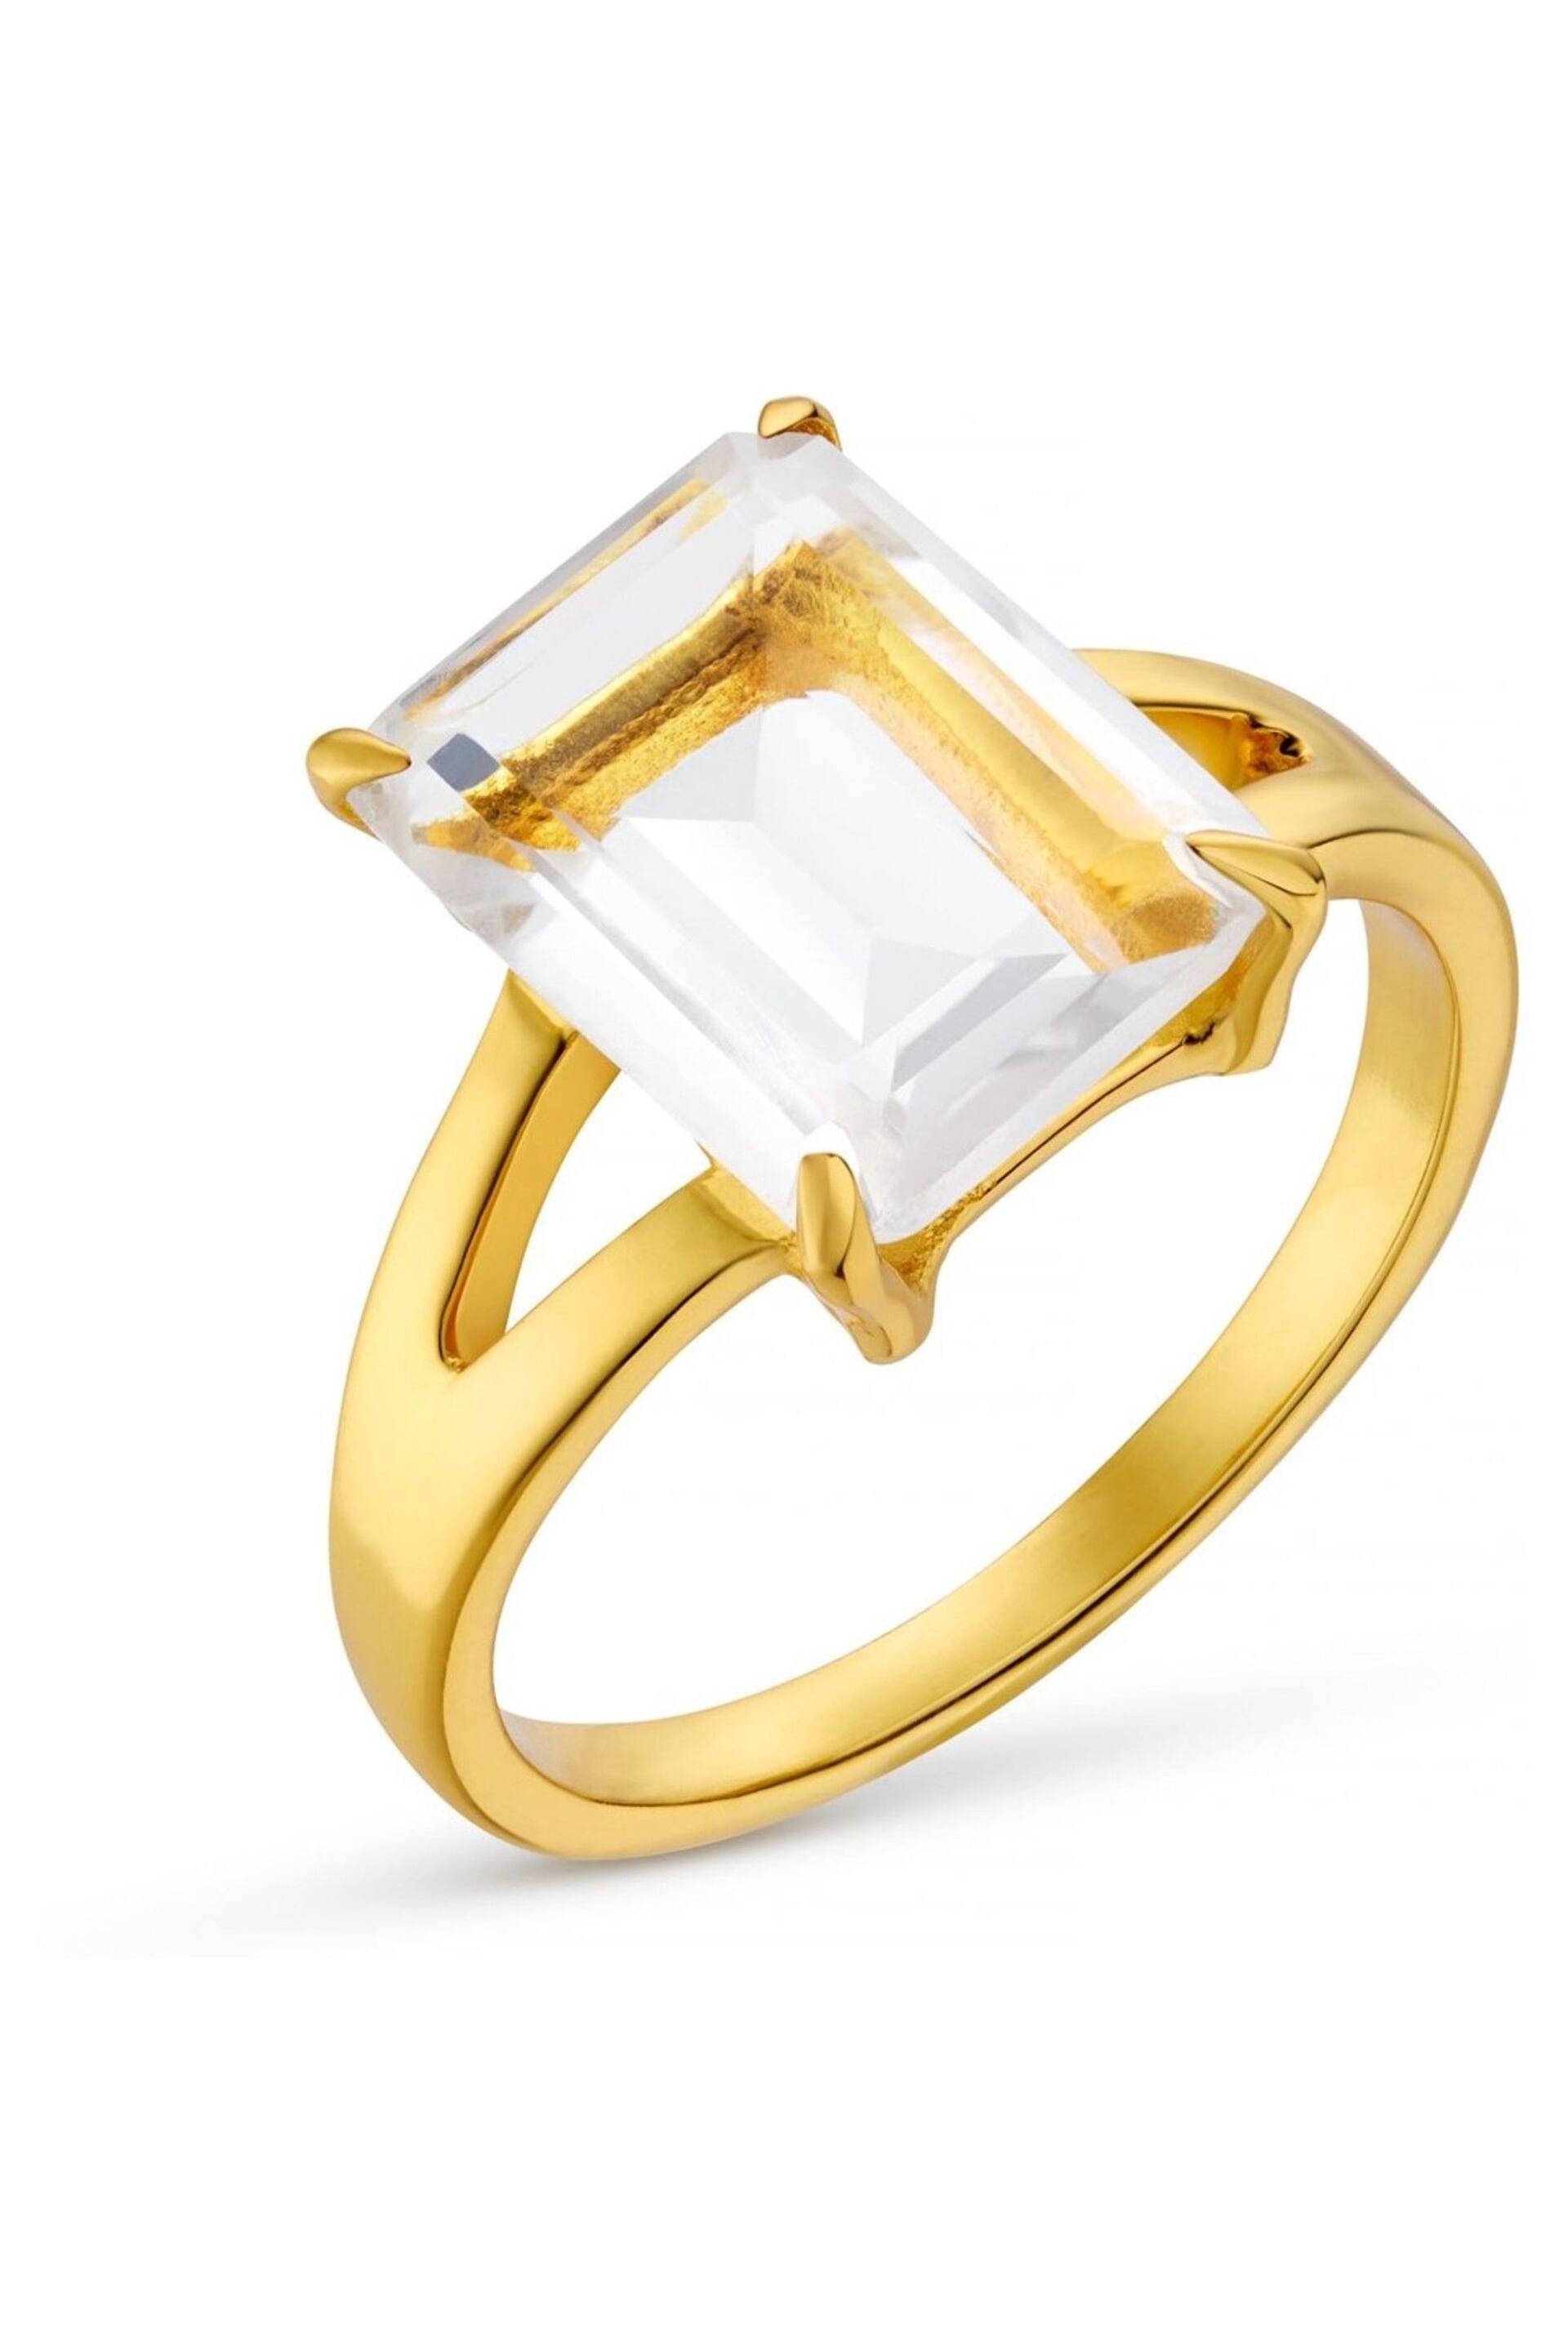 Orelia London 18k Gold Plating Semi Precious Claw Set Ring - Image 1 of 1